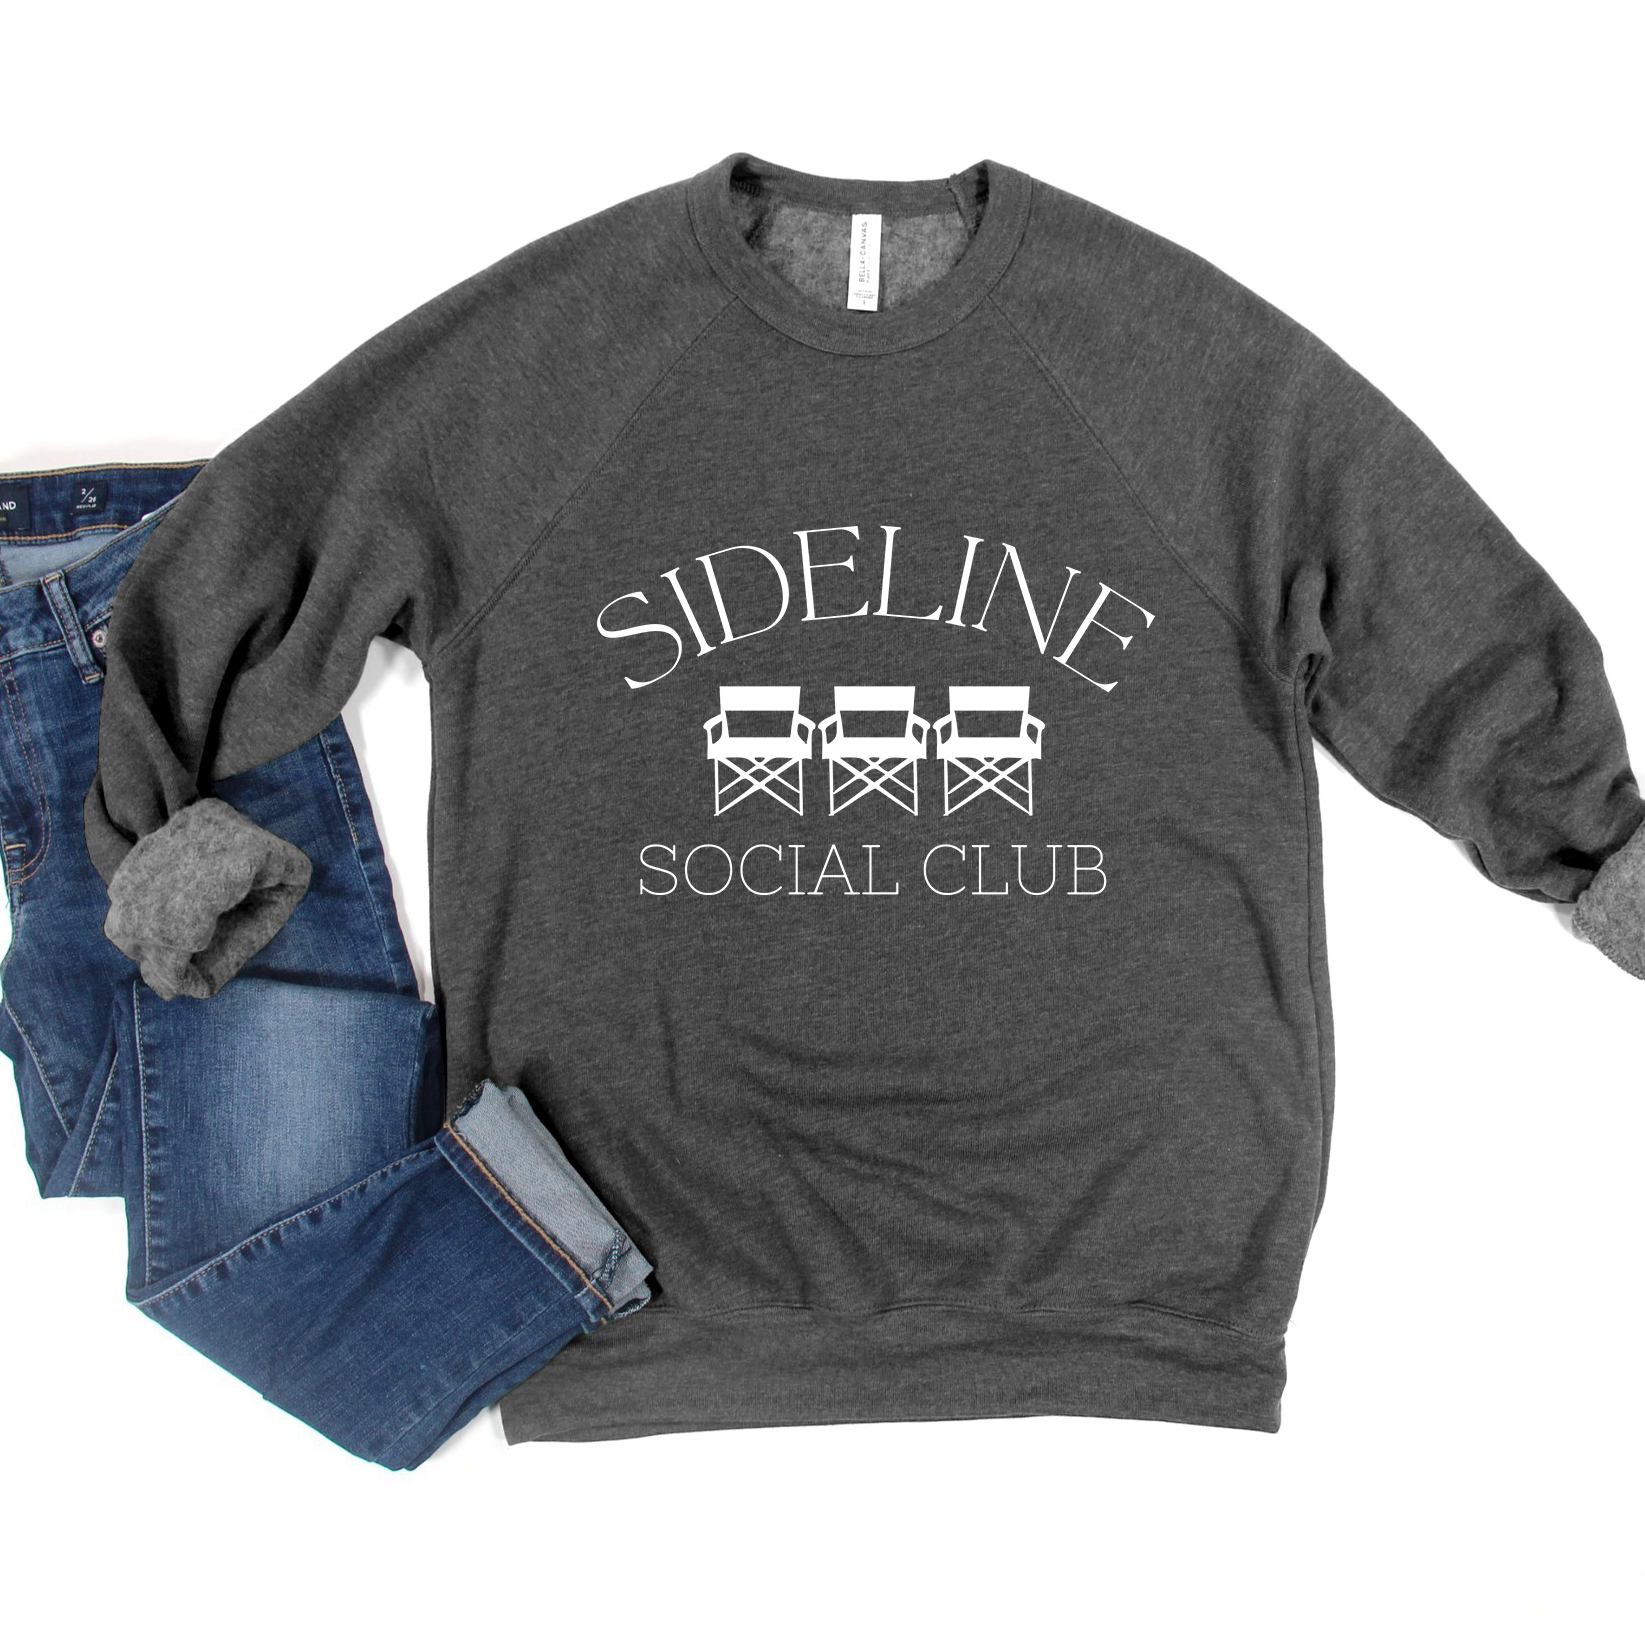 Sideline Social Club Tee OR Sweatshirt